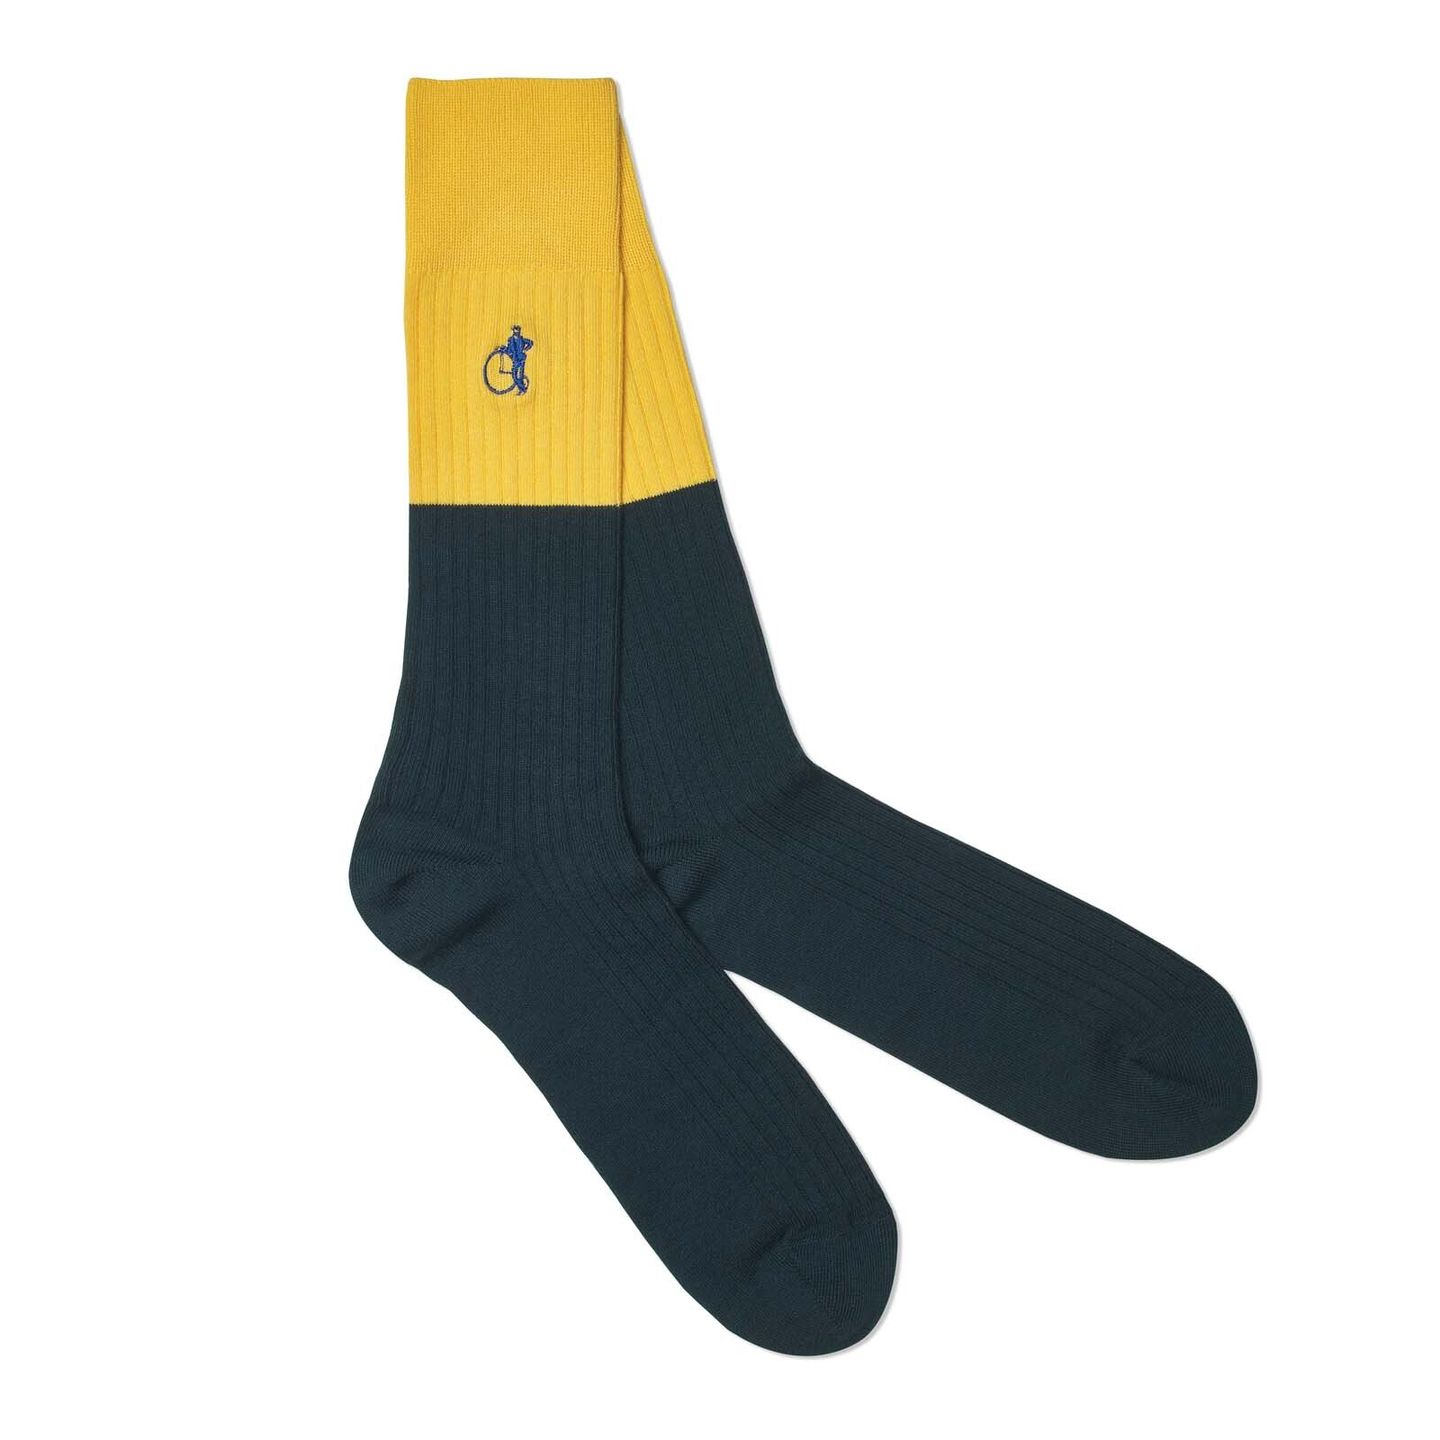 Summer Moss style socks Half Green Half Yellow Socks with London Sock Company logo embroidered